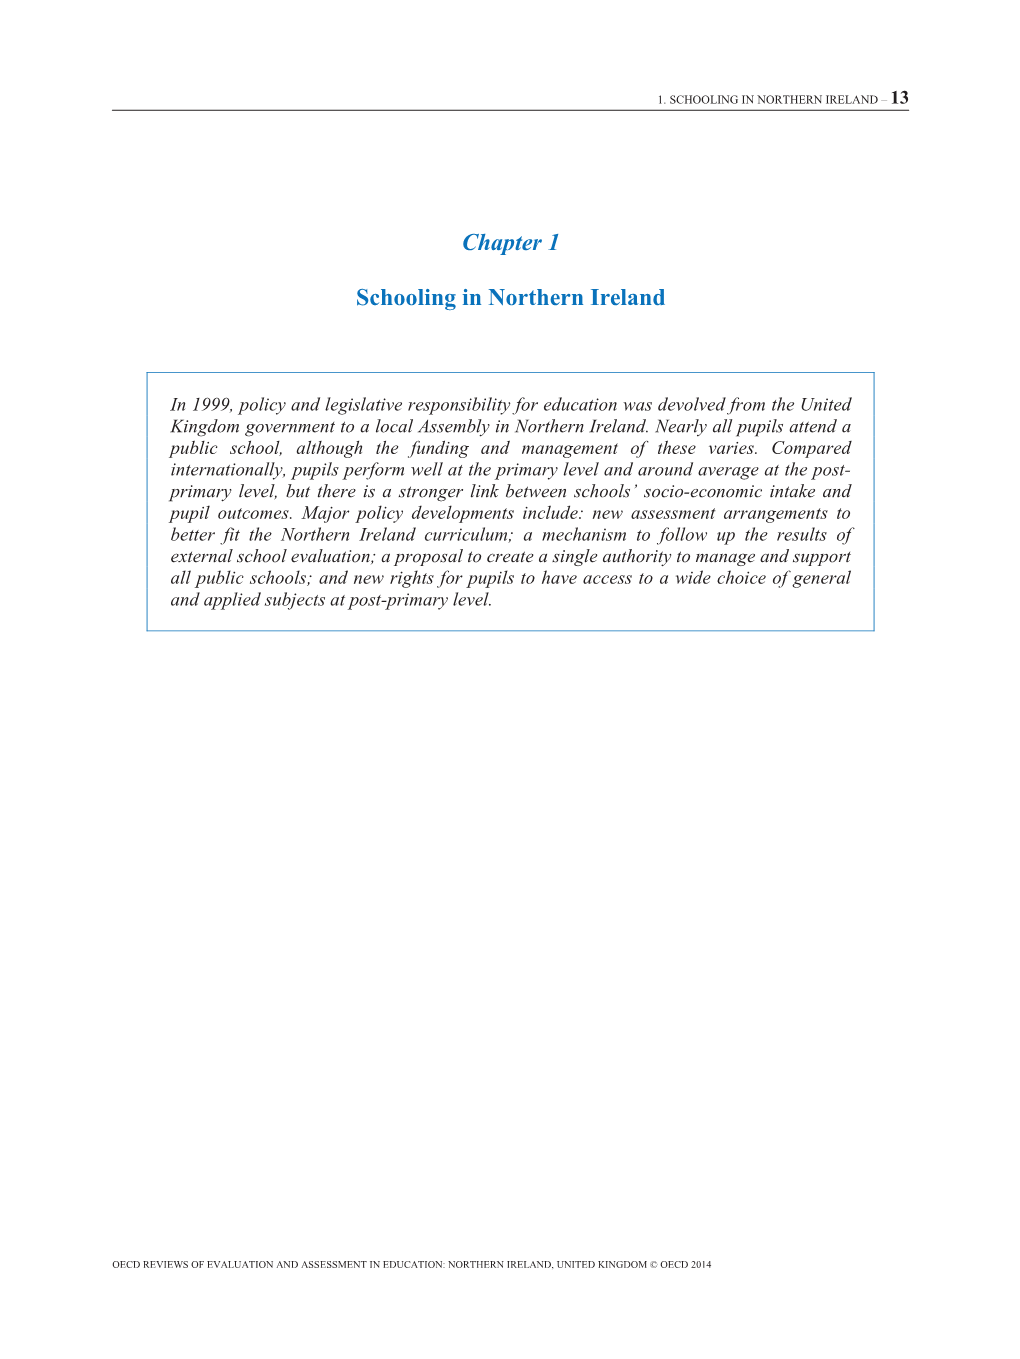 Chapter 1 Schooling in Northern Ireland